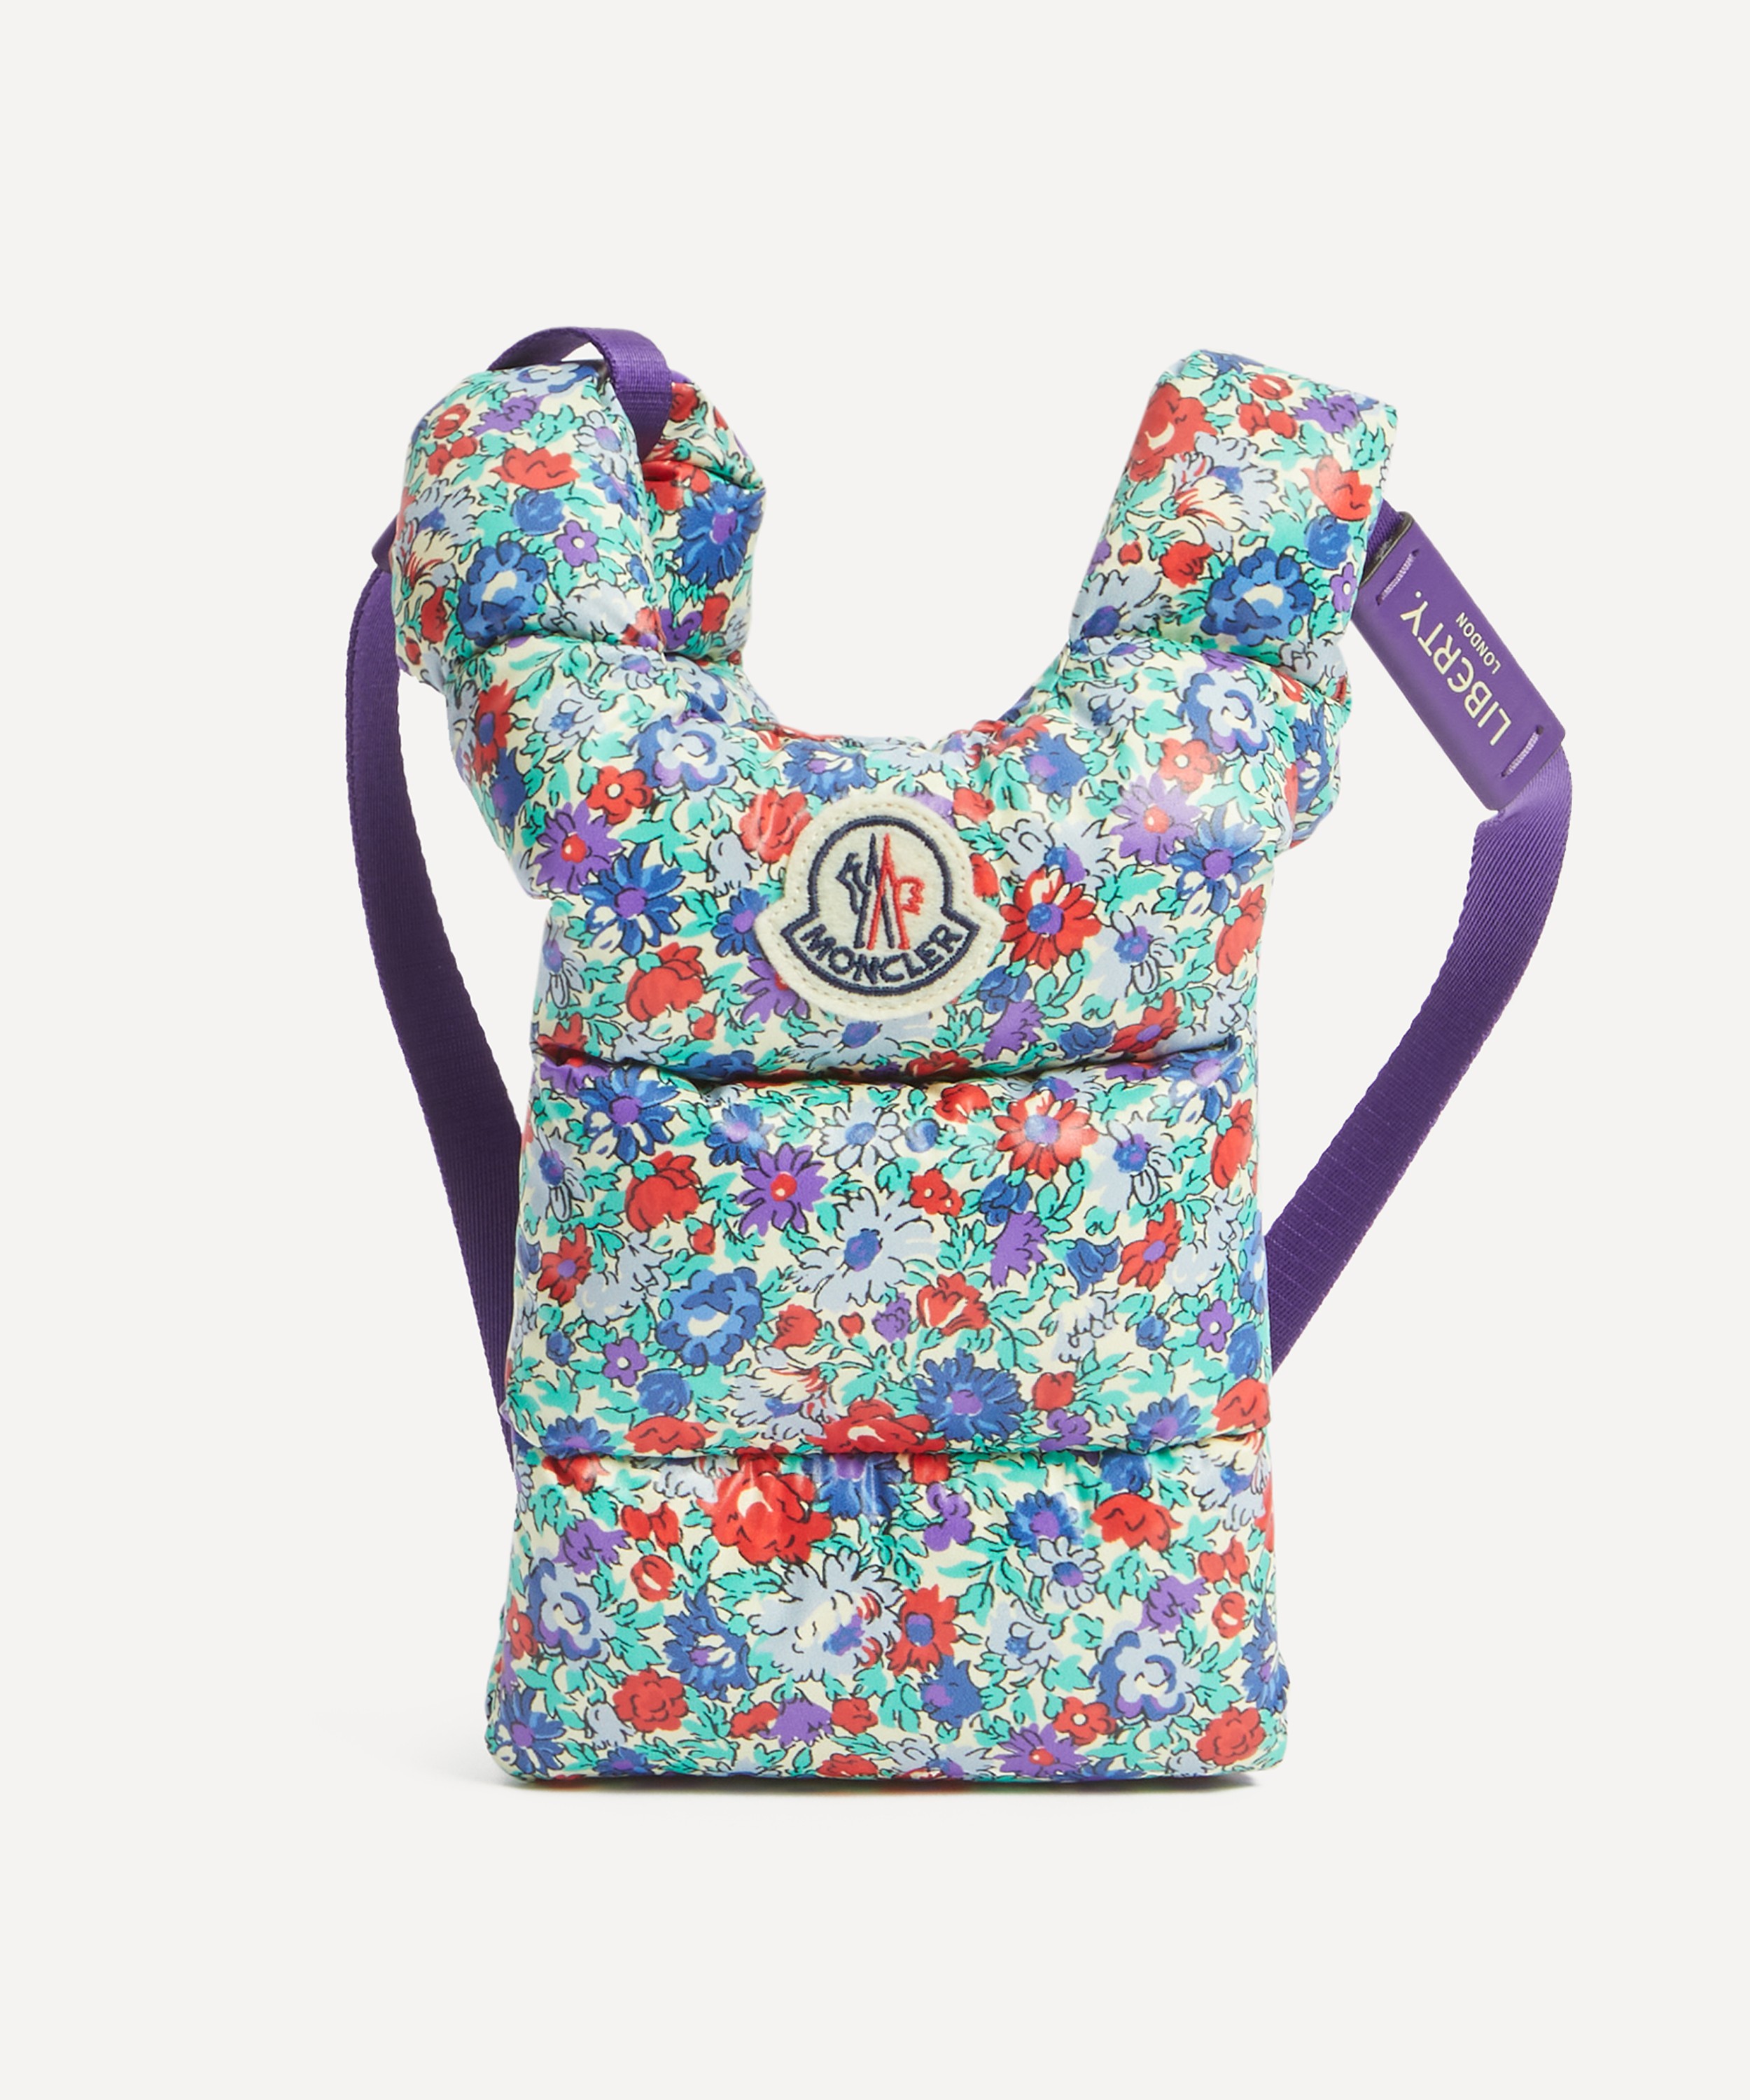 Men's Designer Bags | Backpacks & Rucksacks | Liberty USA